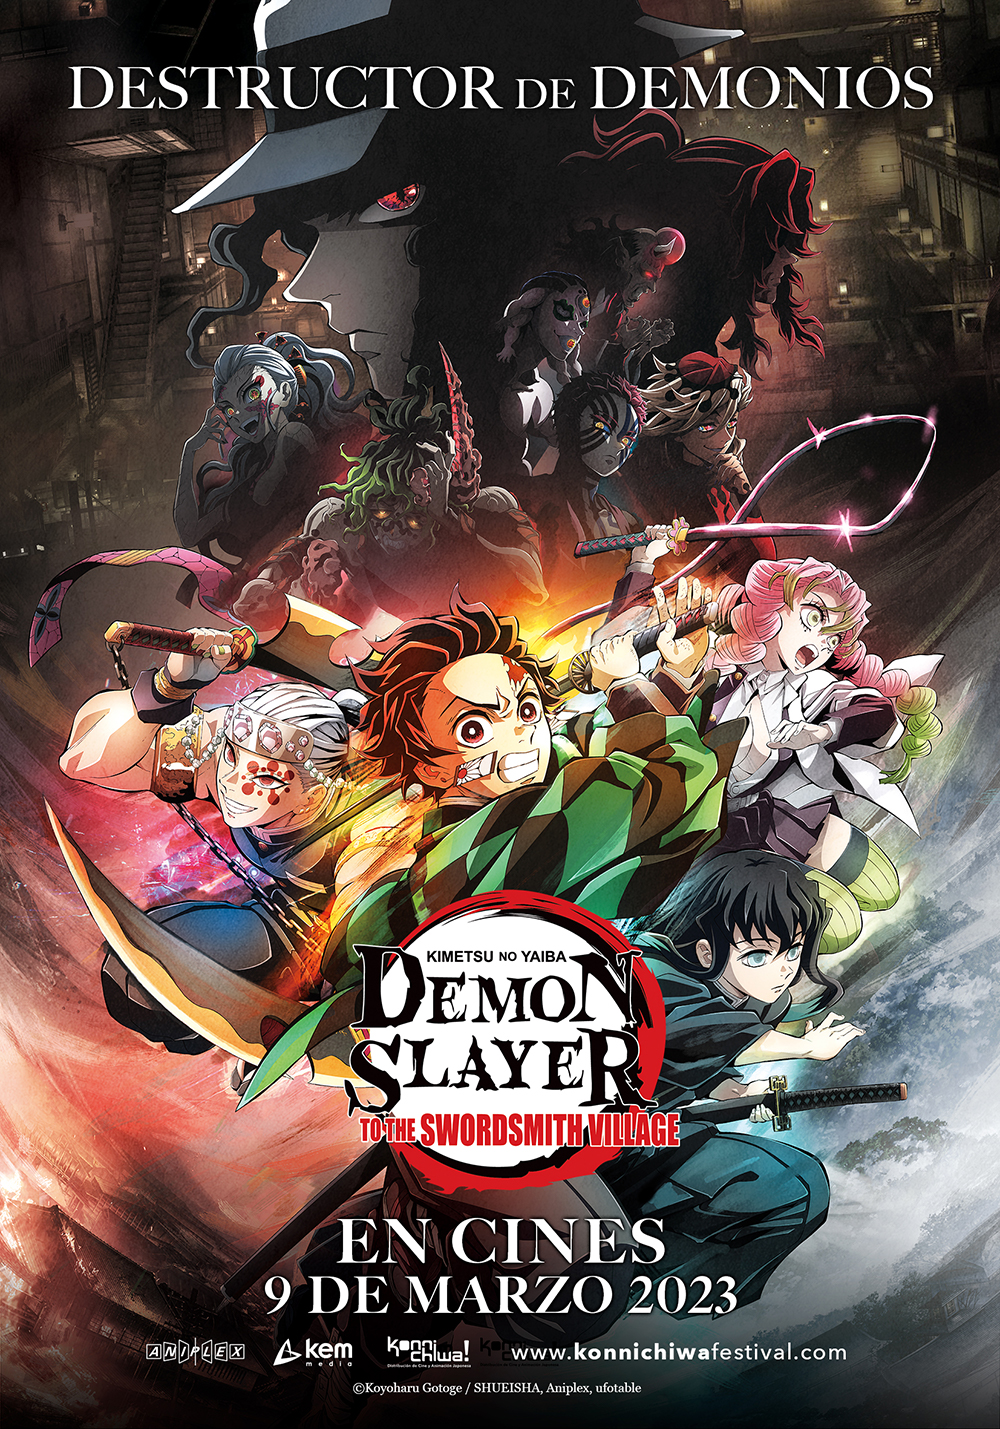 Demon Slayer -Kimetsu no Yaiba- To the Swordsmith Village